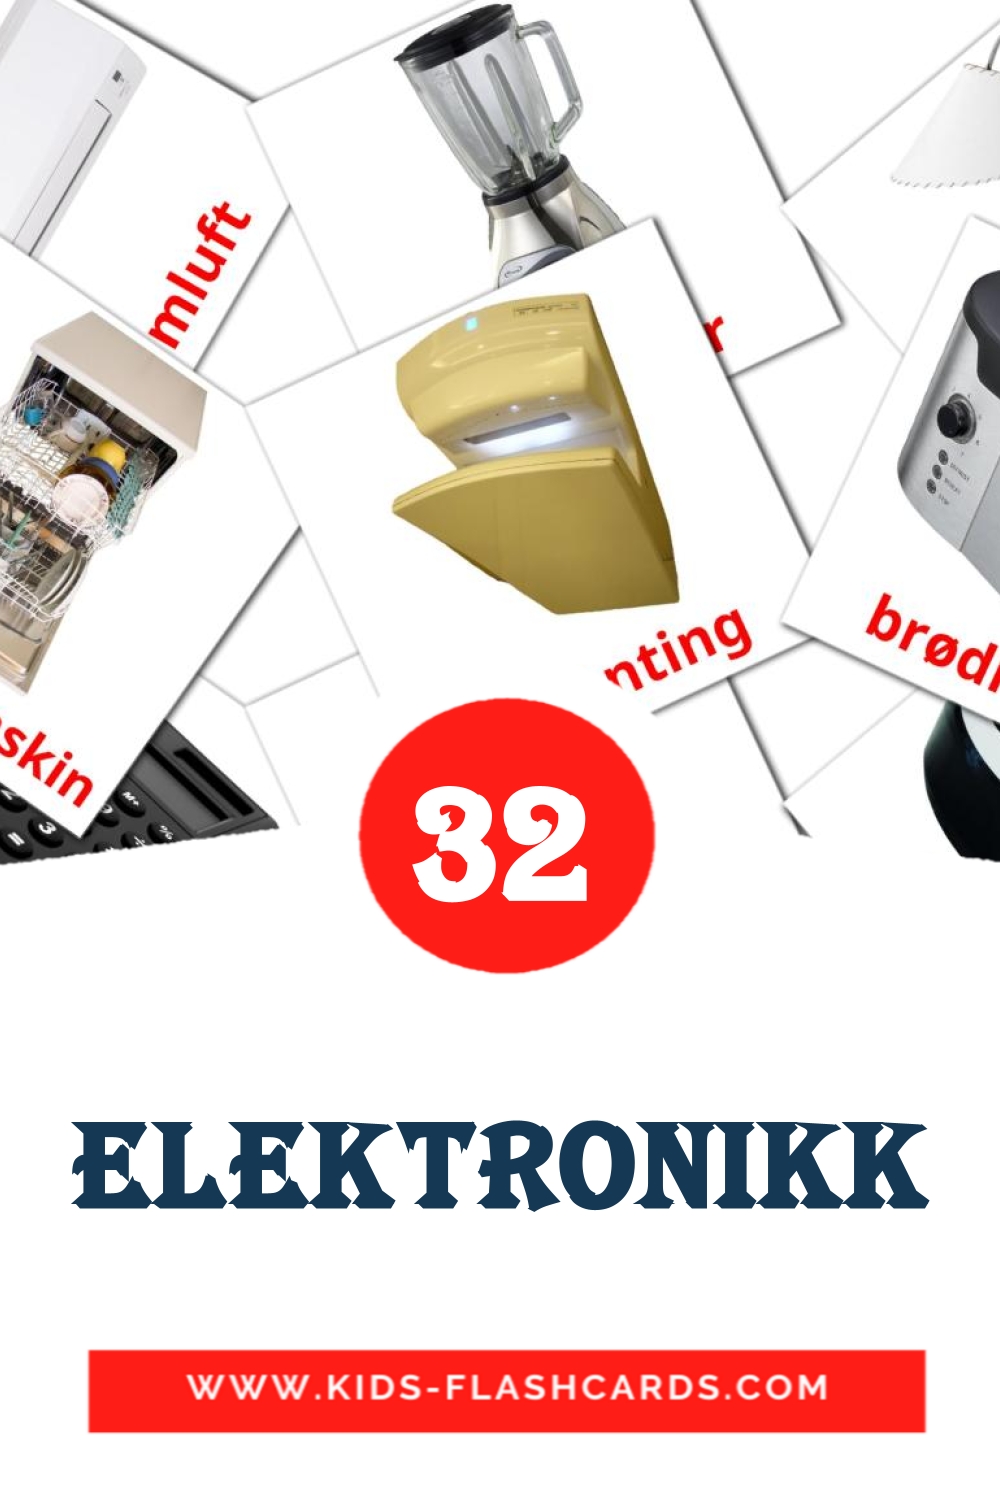 32 carte illustrate di Elektronikk per la scuola materna in norvegese